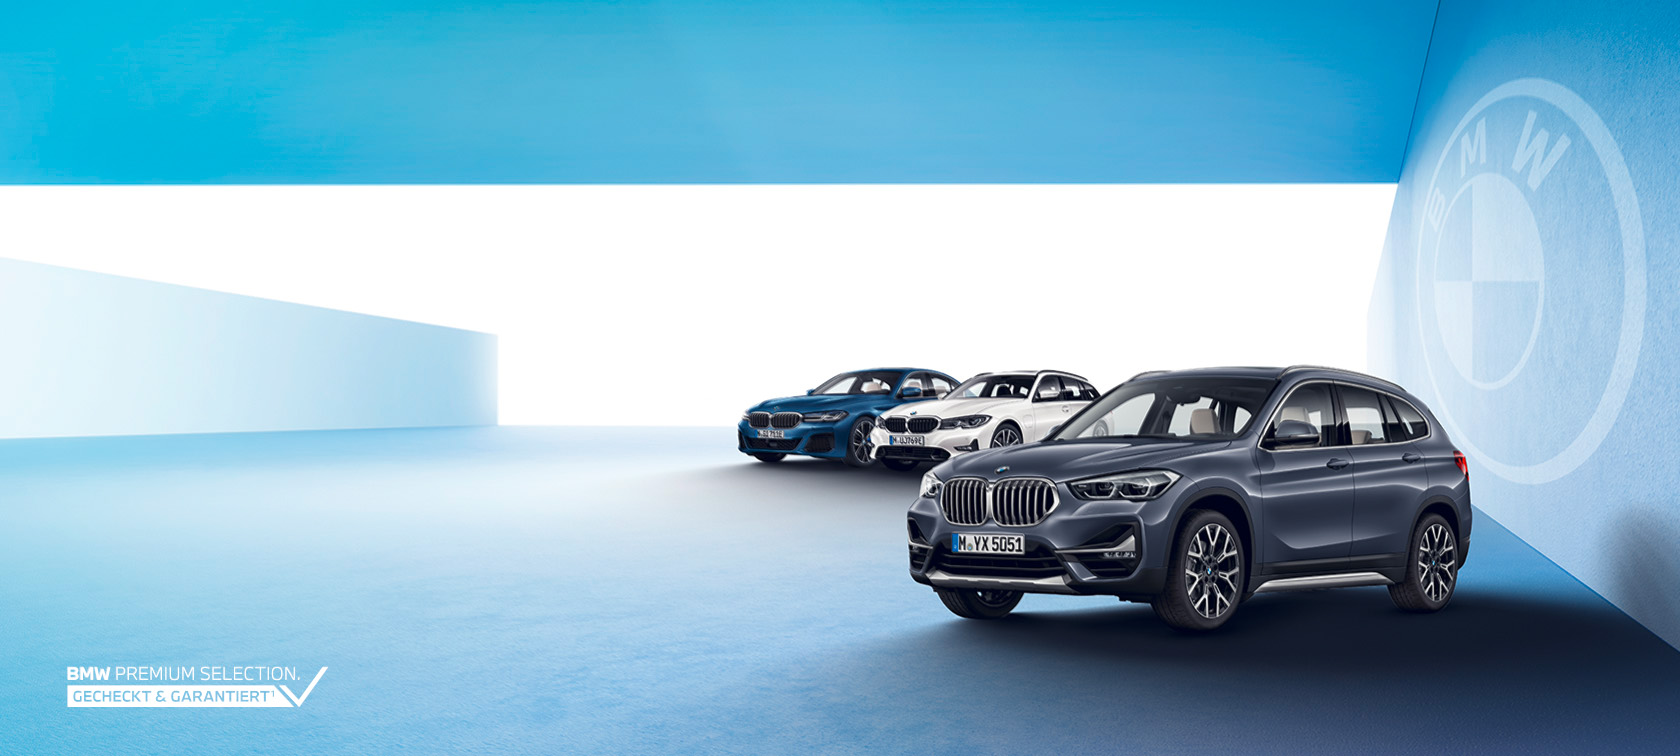 Auto Müller GmbH: BMW Fahrzeuge, Services, Angebote u.v.m. > BMW